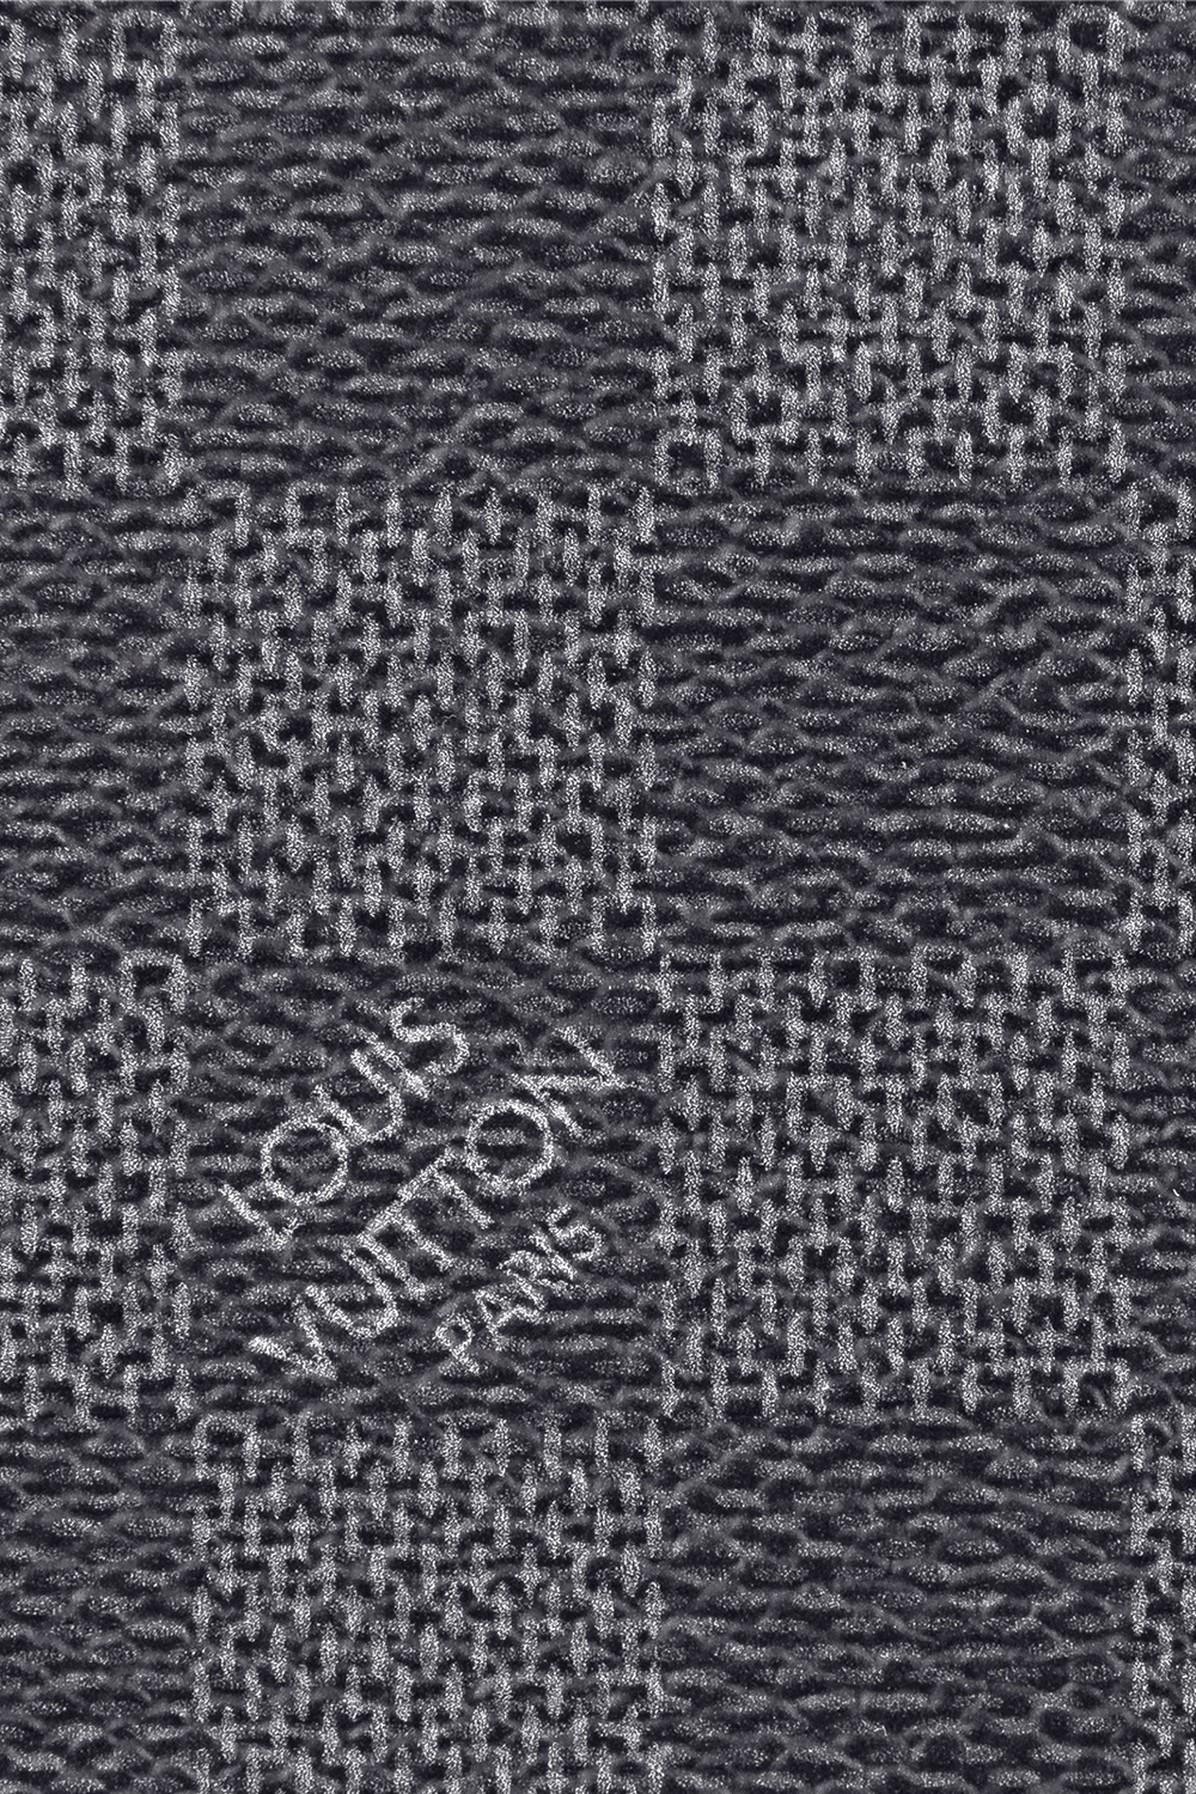 Louis Vuitton Horizon Damier Graphite 70 Black